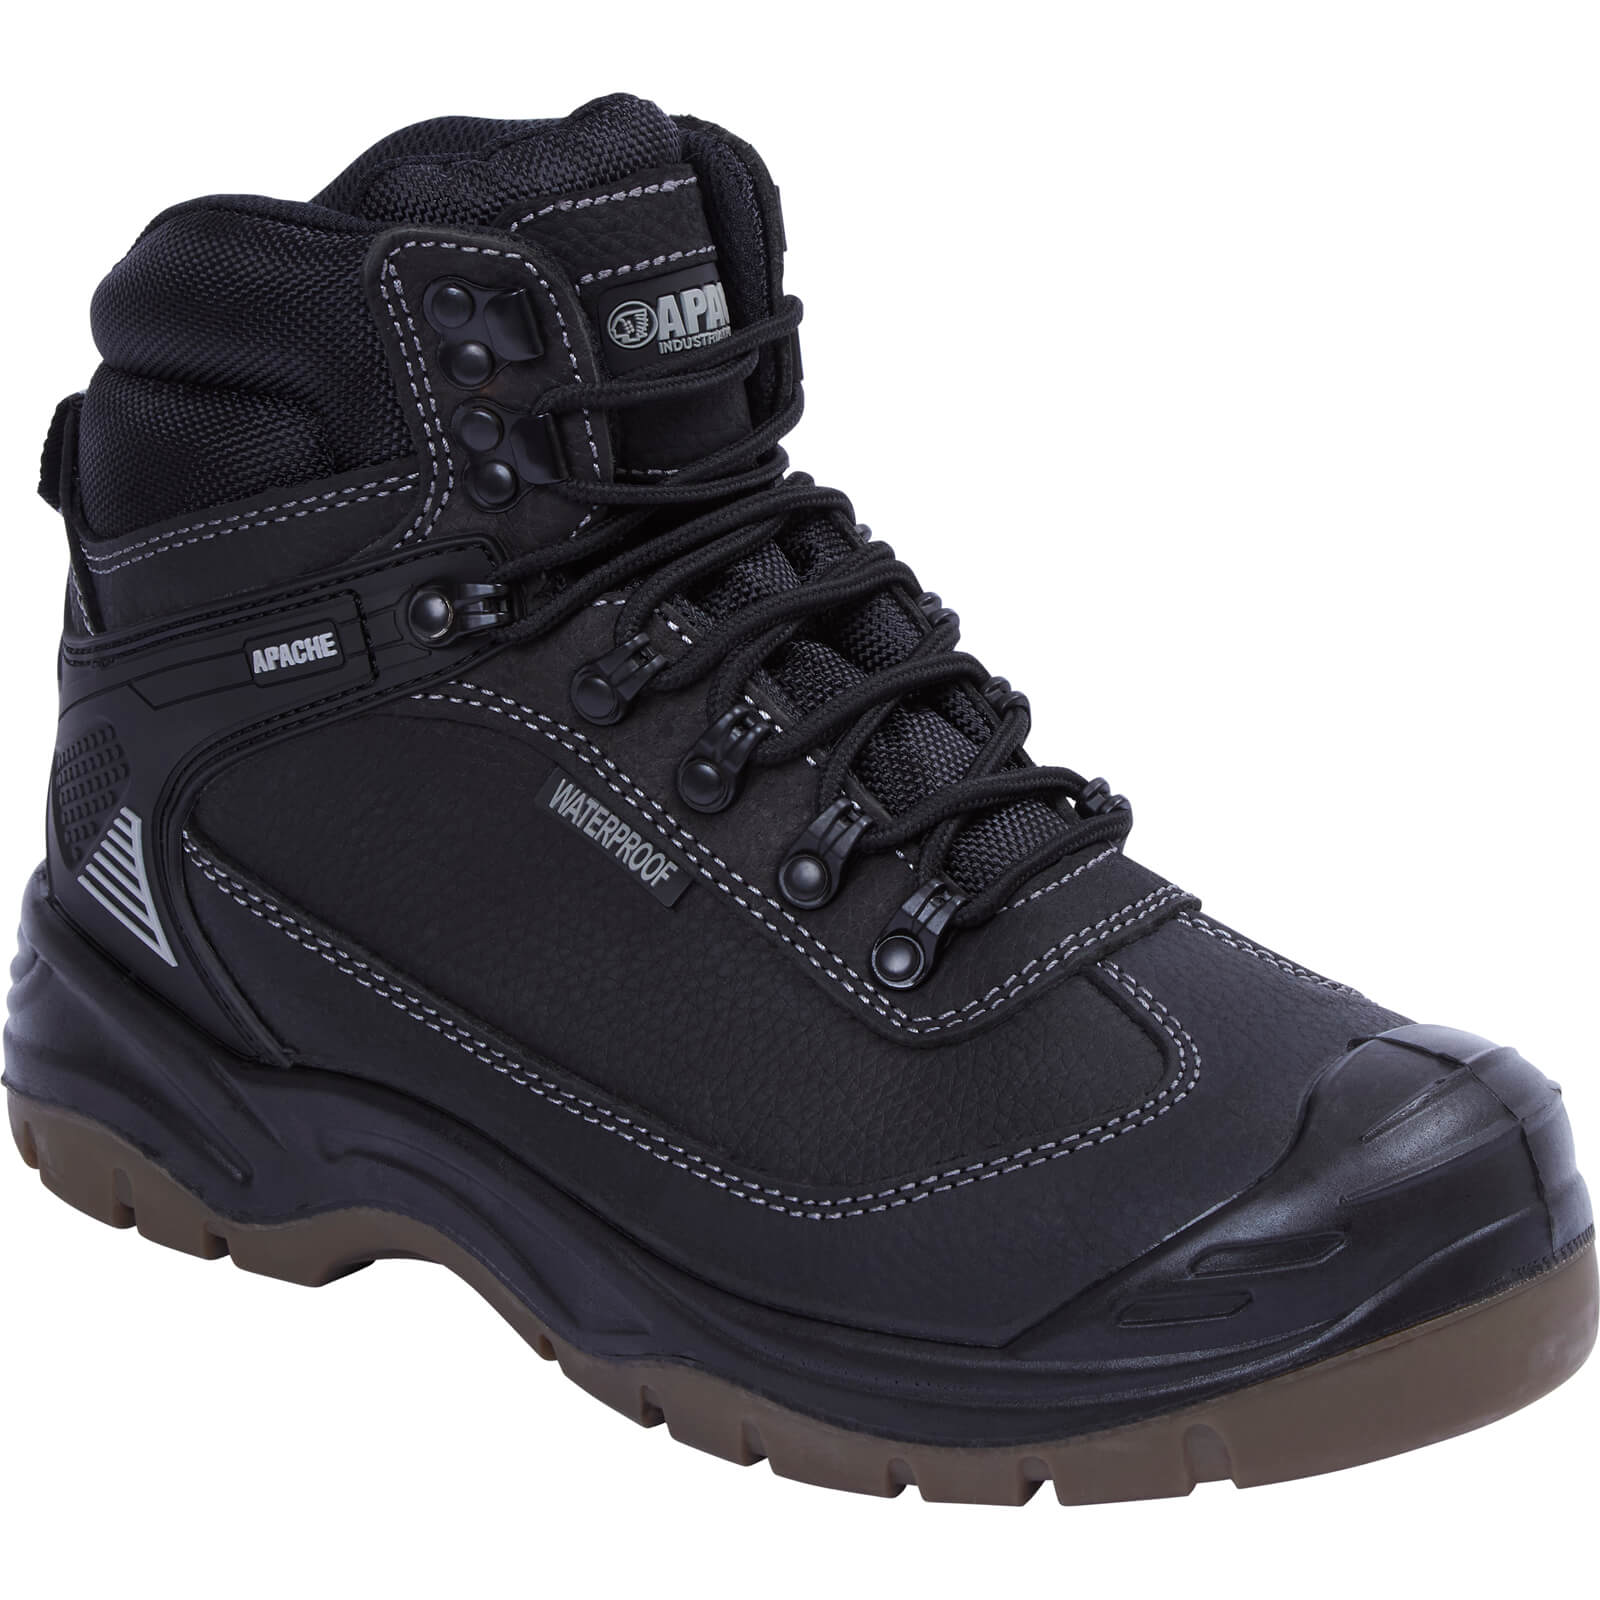 Apache RANGER Waterproof Safety Hiker Boots Black Size 6